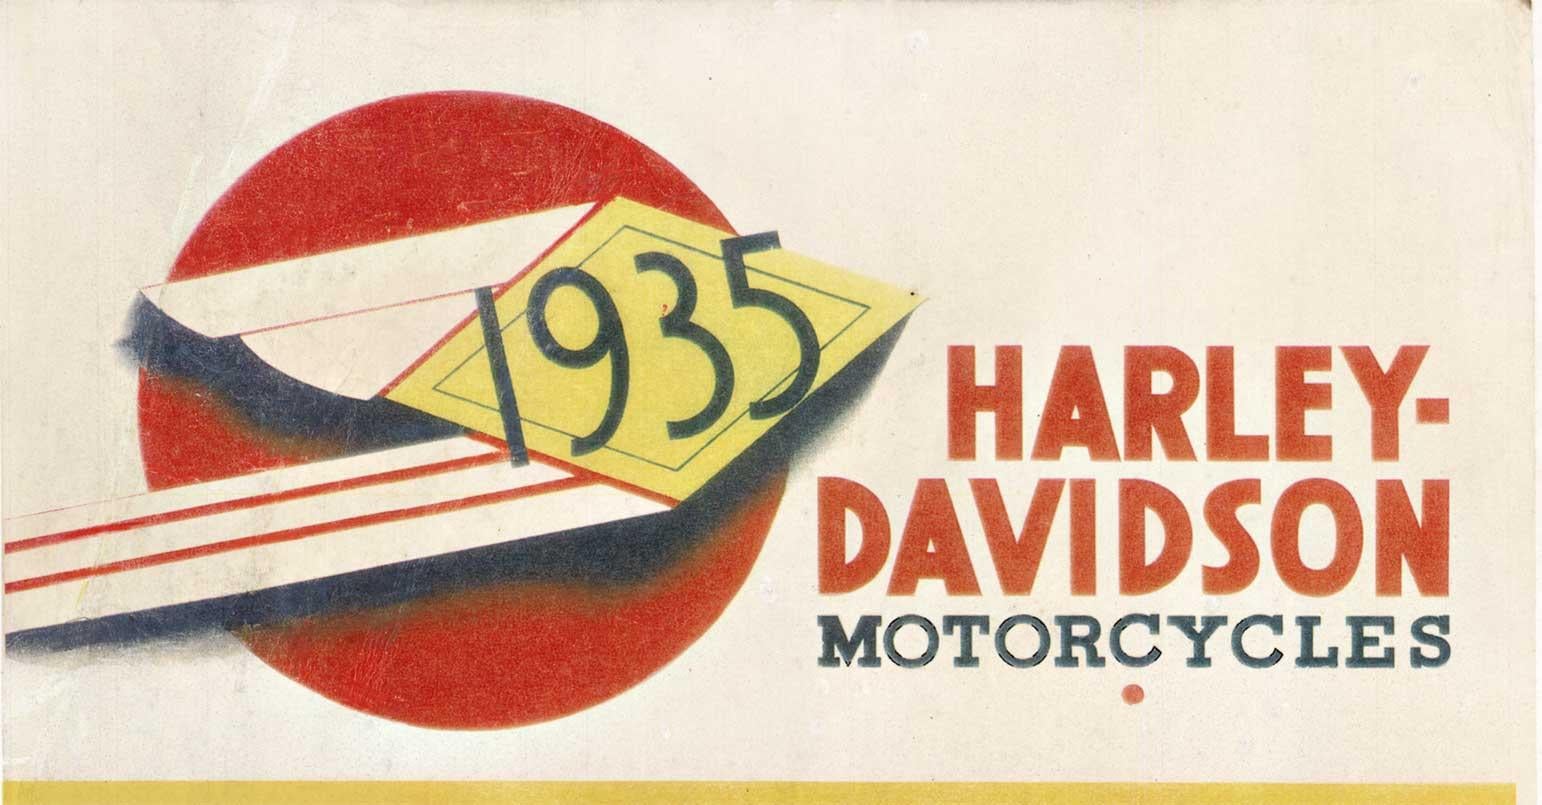 harley davidson 1935